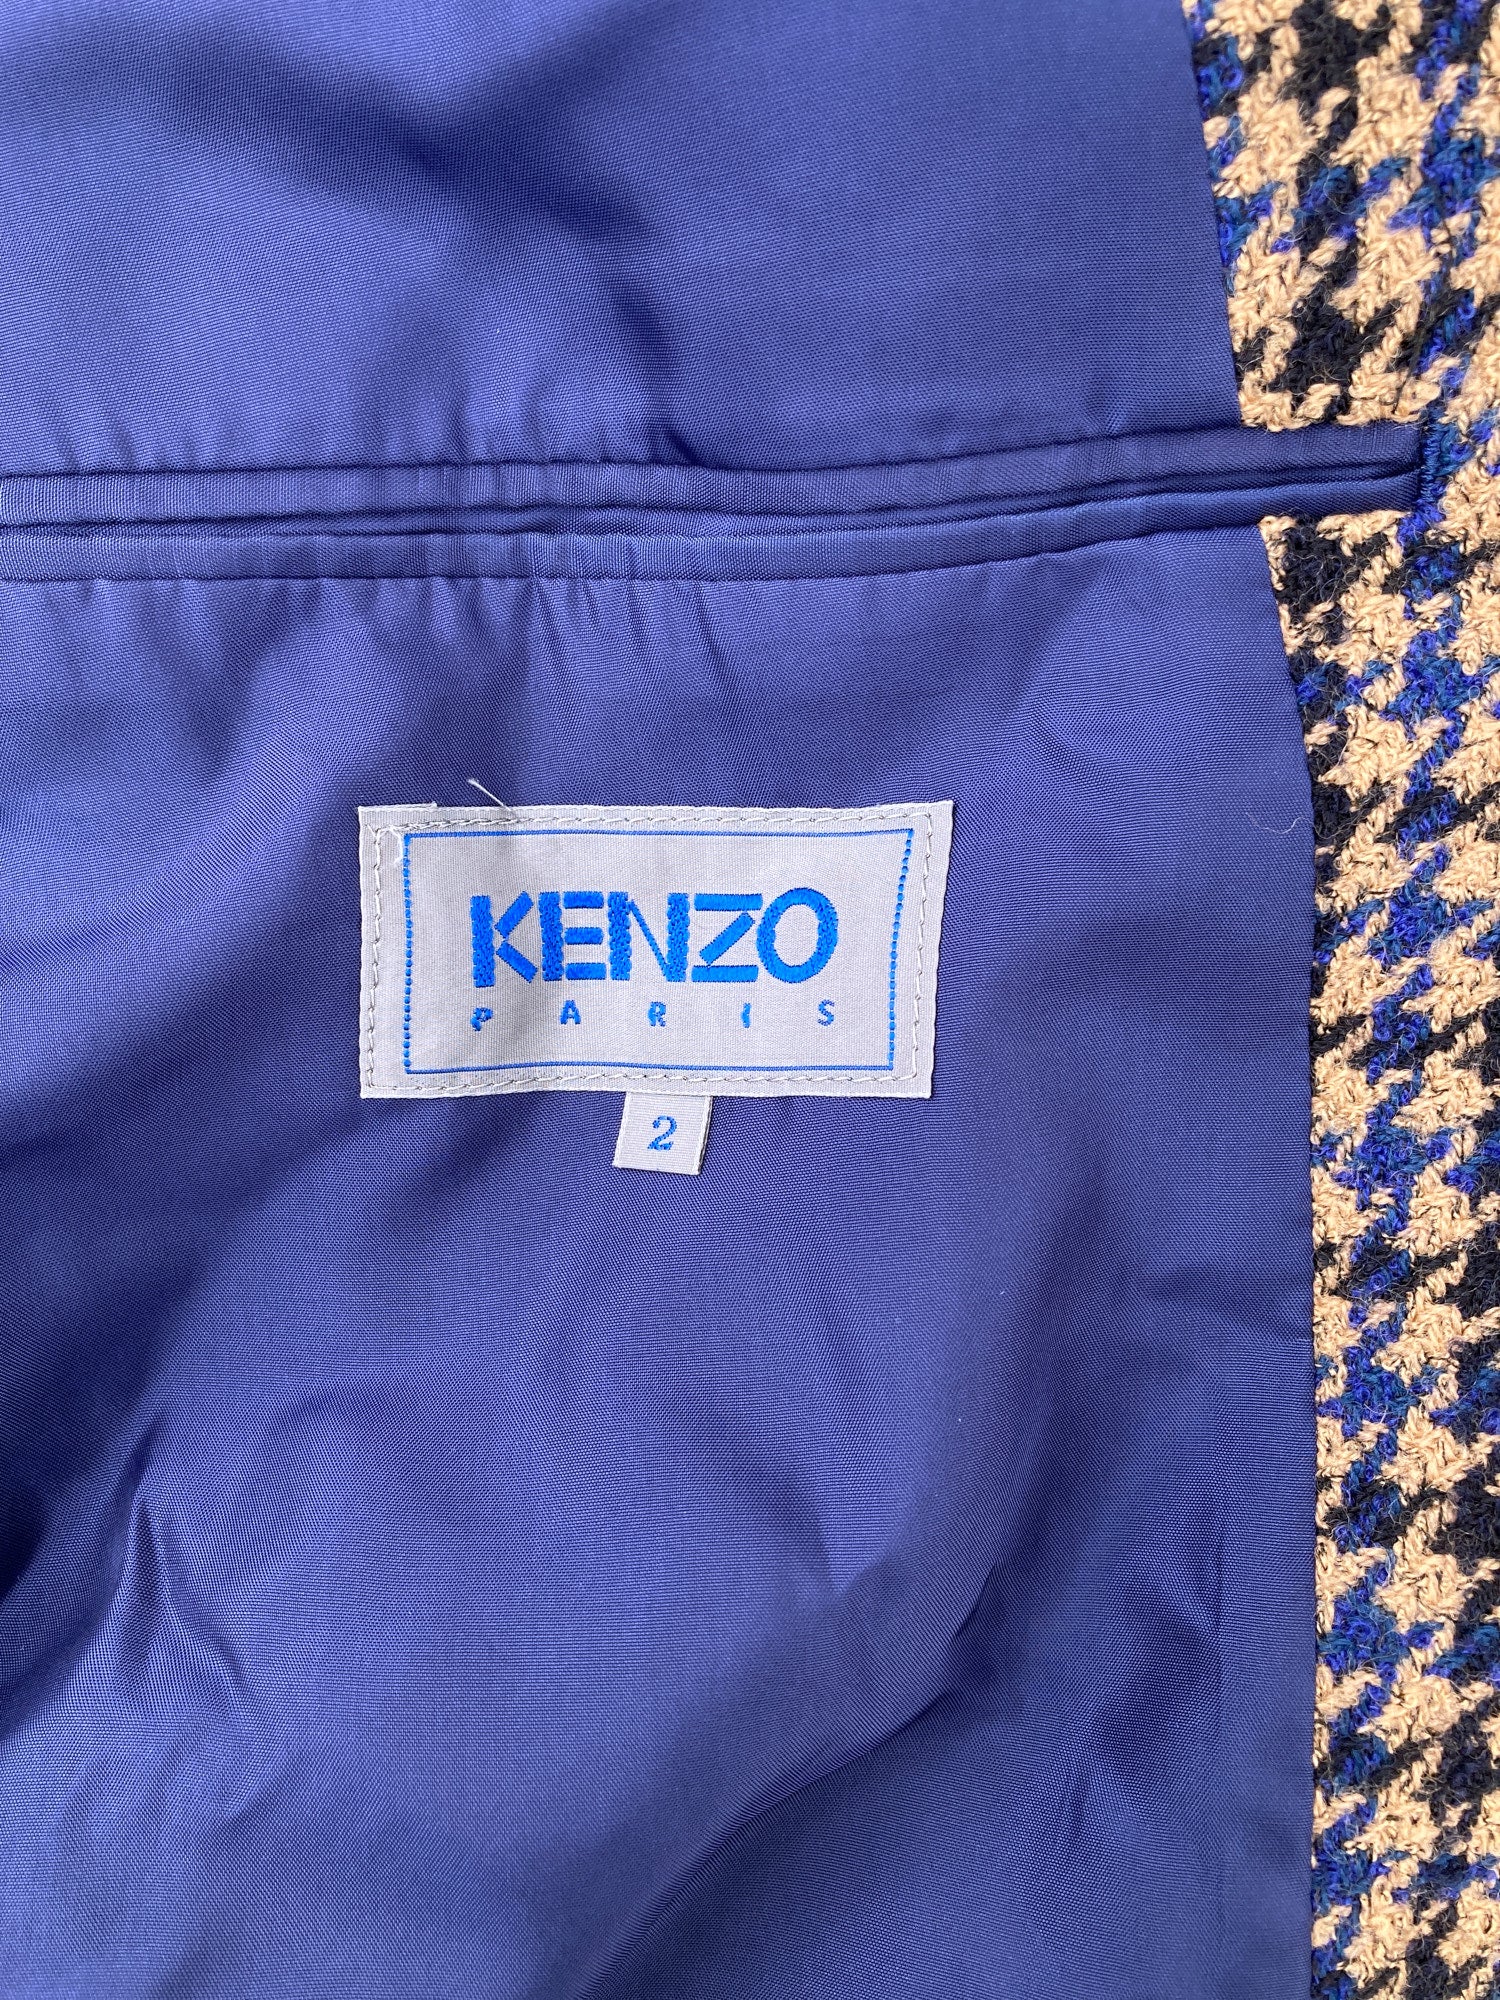 Kenzo Paris 1980s brown blue black houndstooth two button blazer - size M S